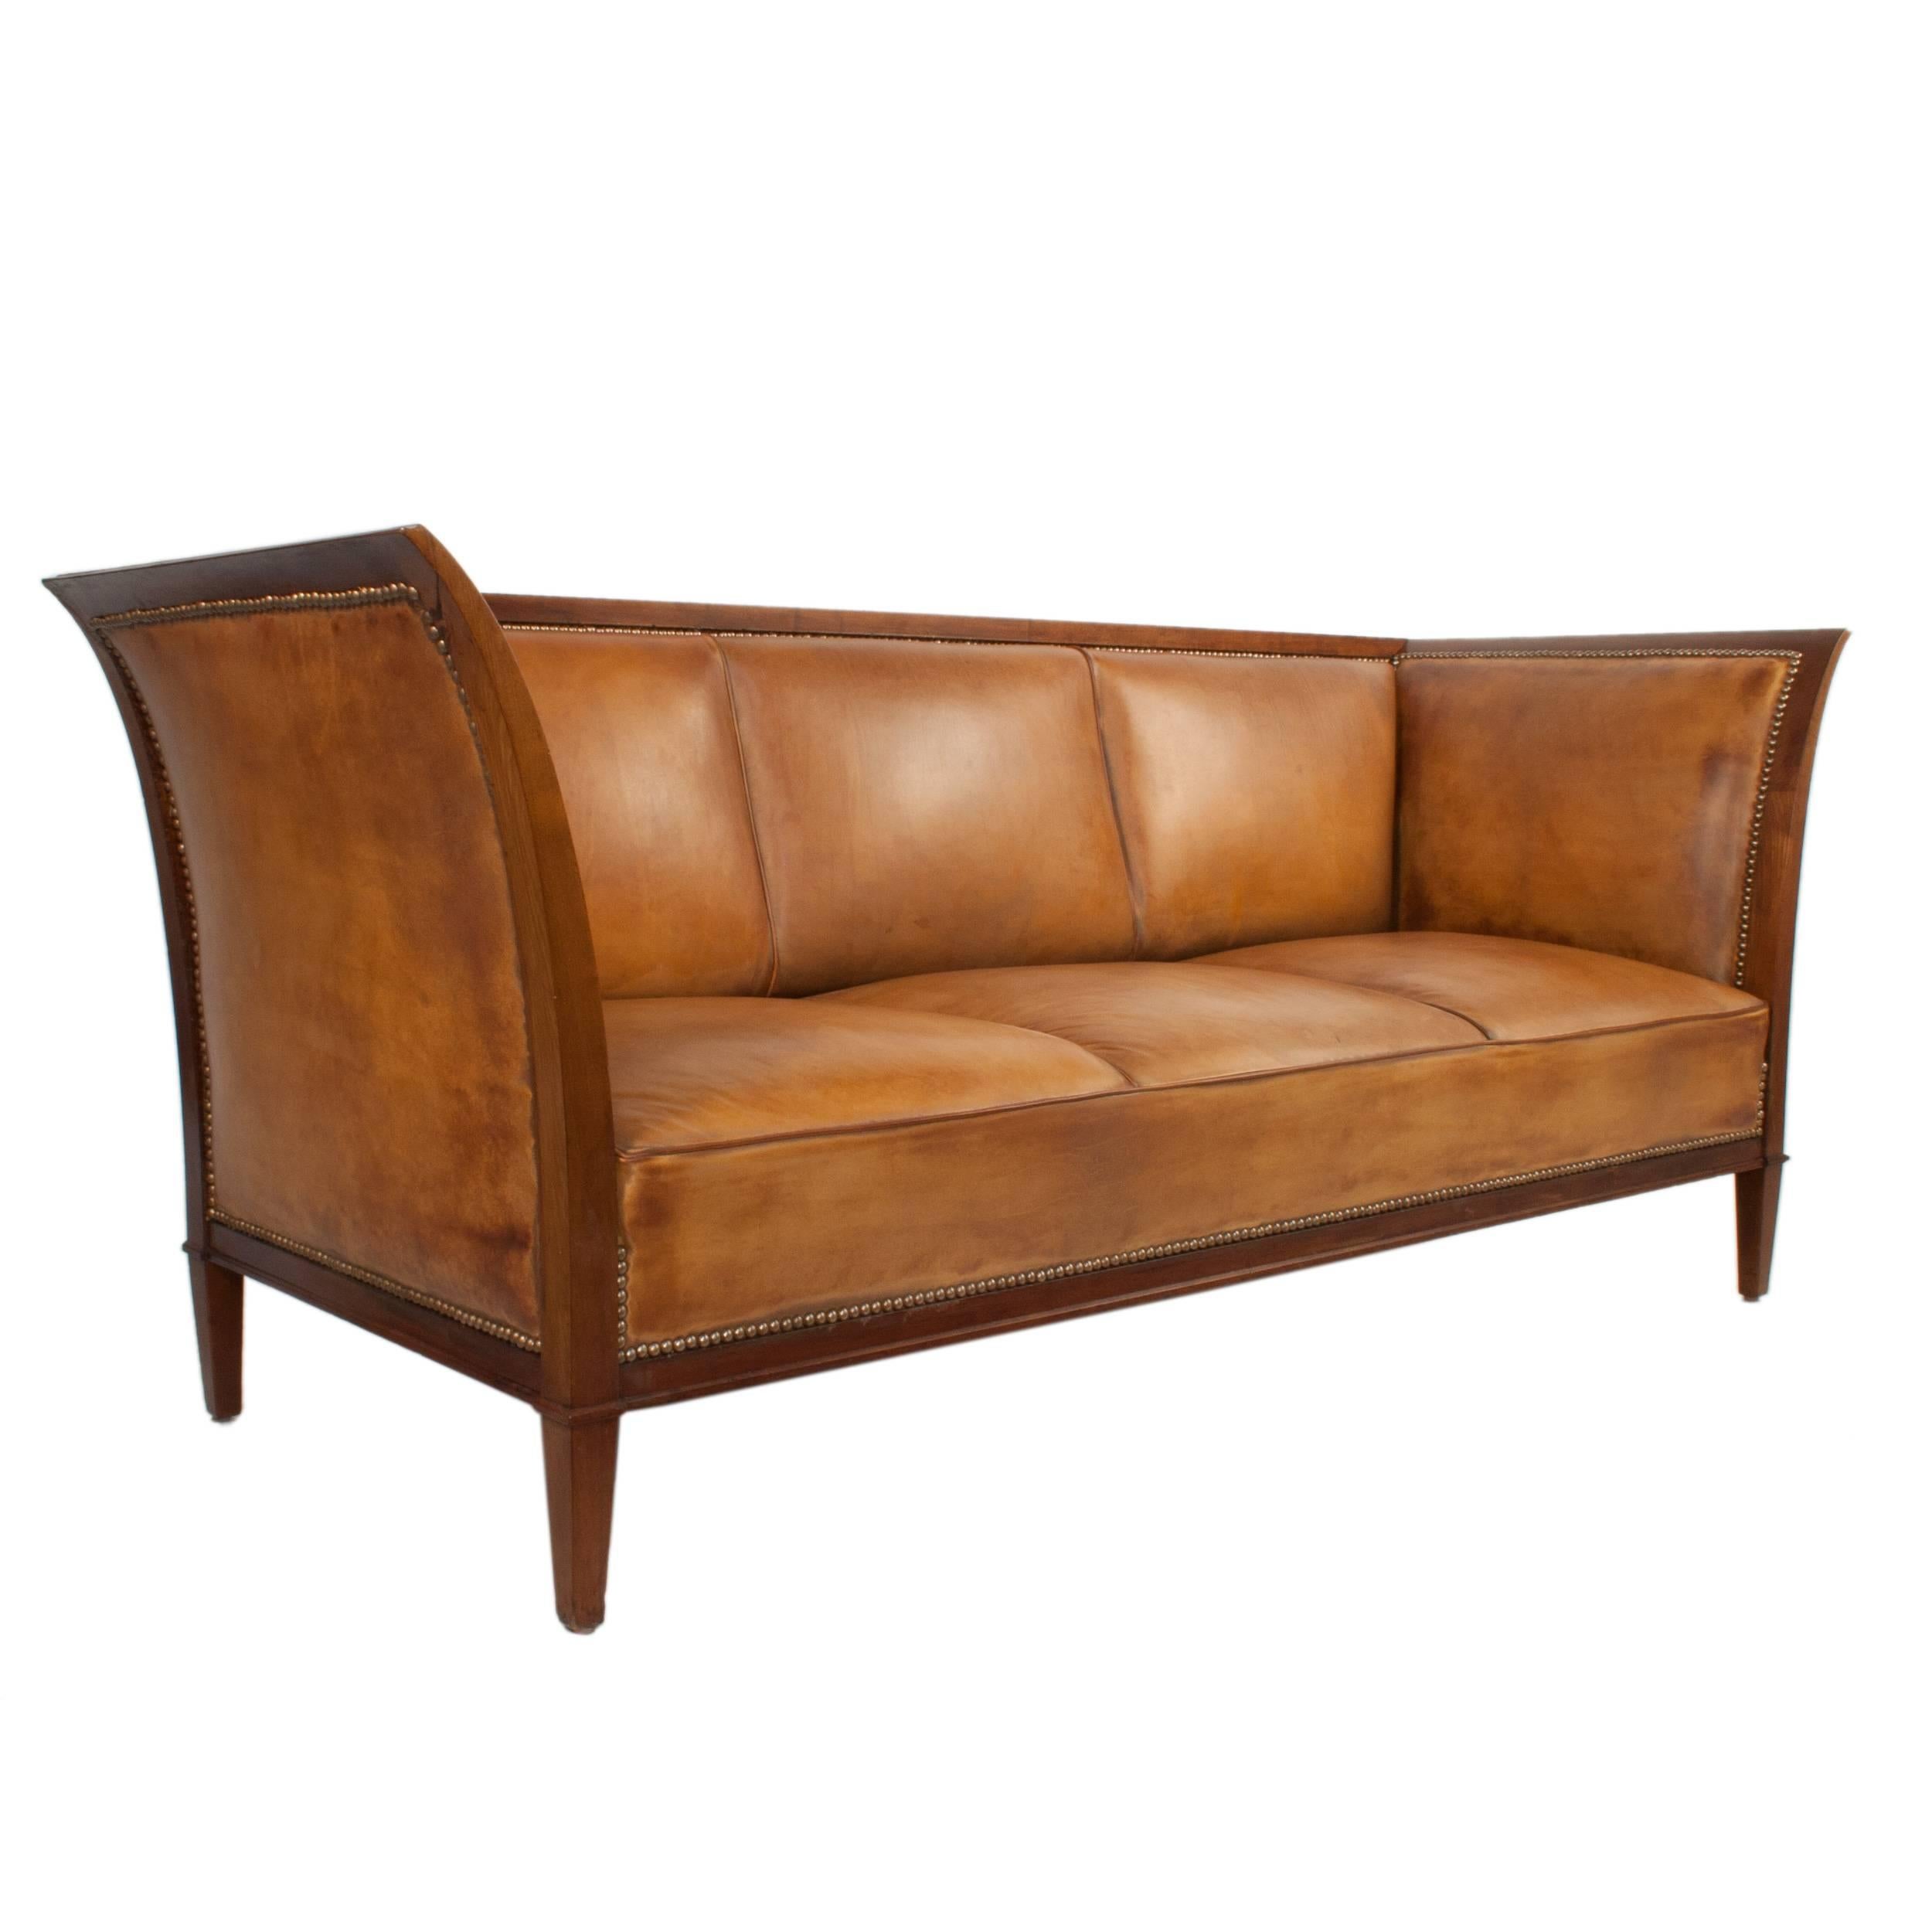 Leather and mahogany sofa by Frits Henningsen.